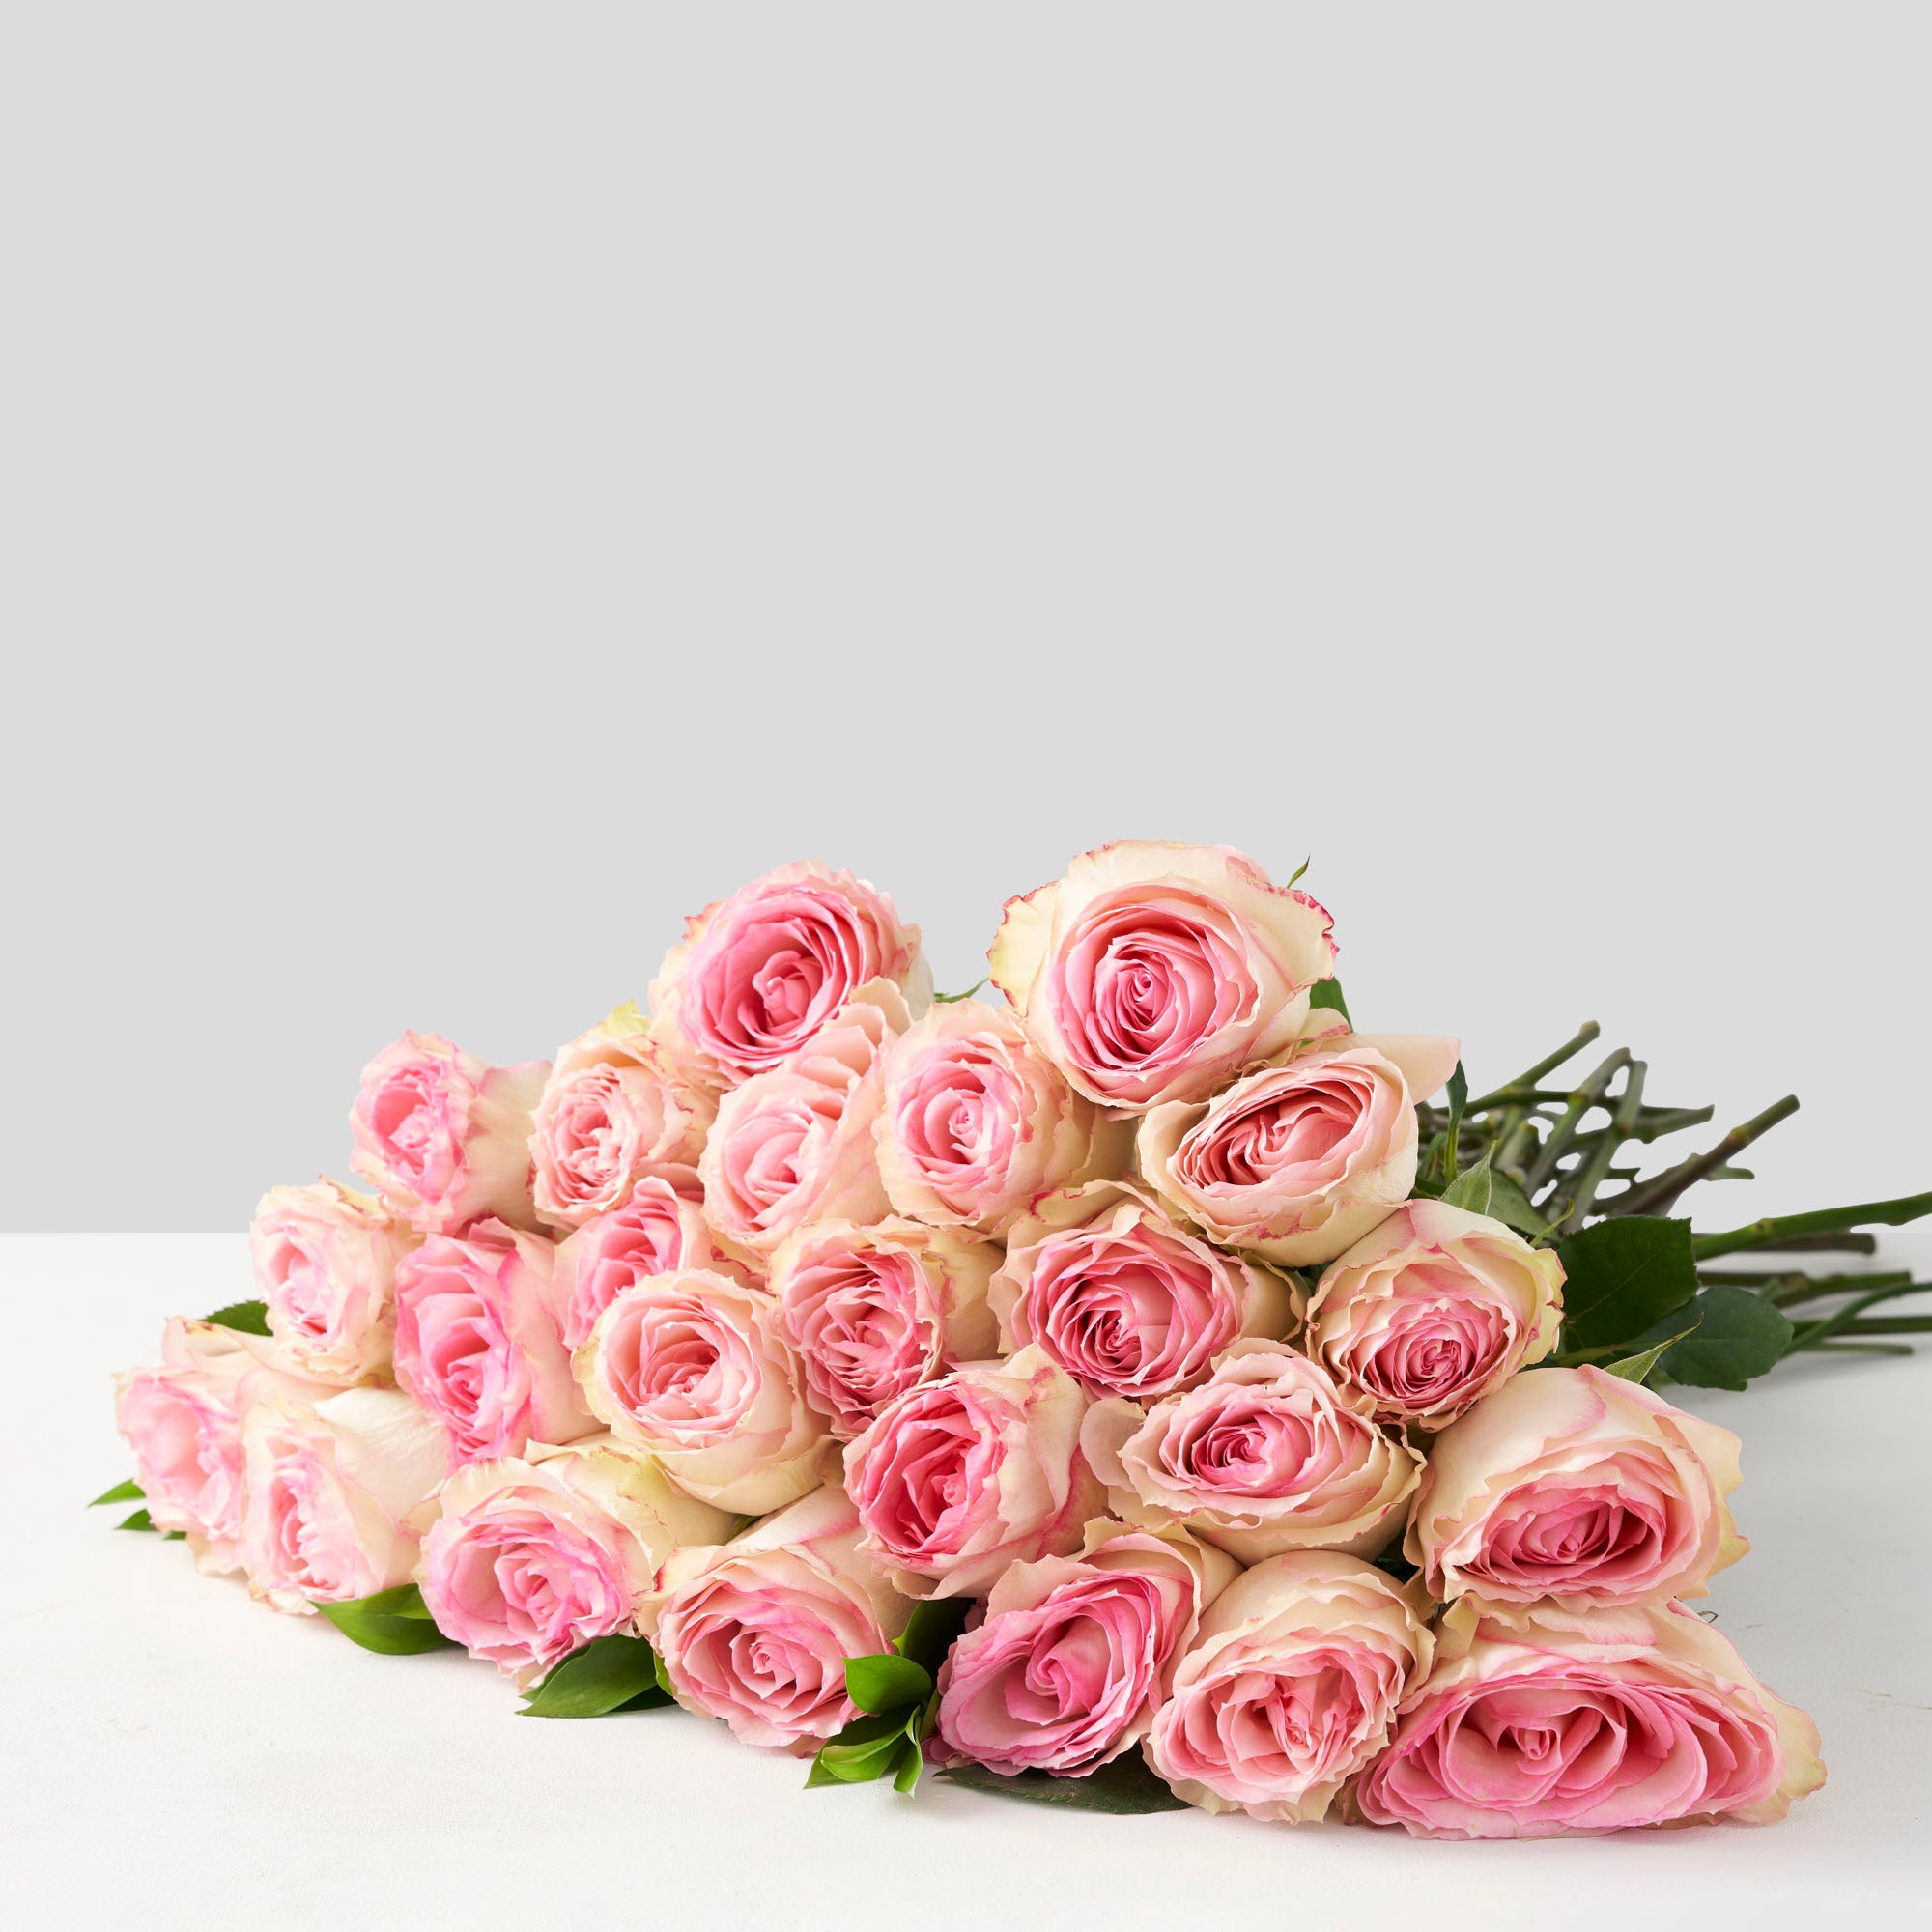 Twenty-four pink Esperance roses on white background.